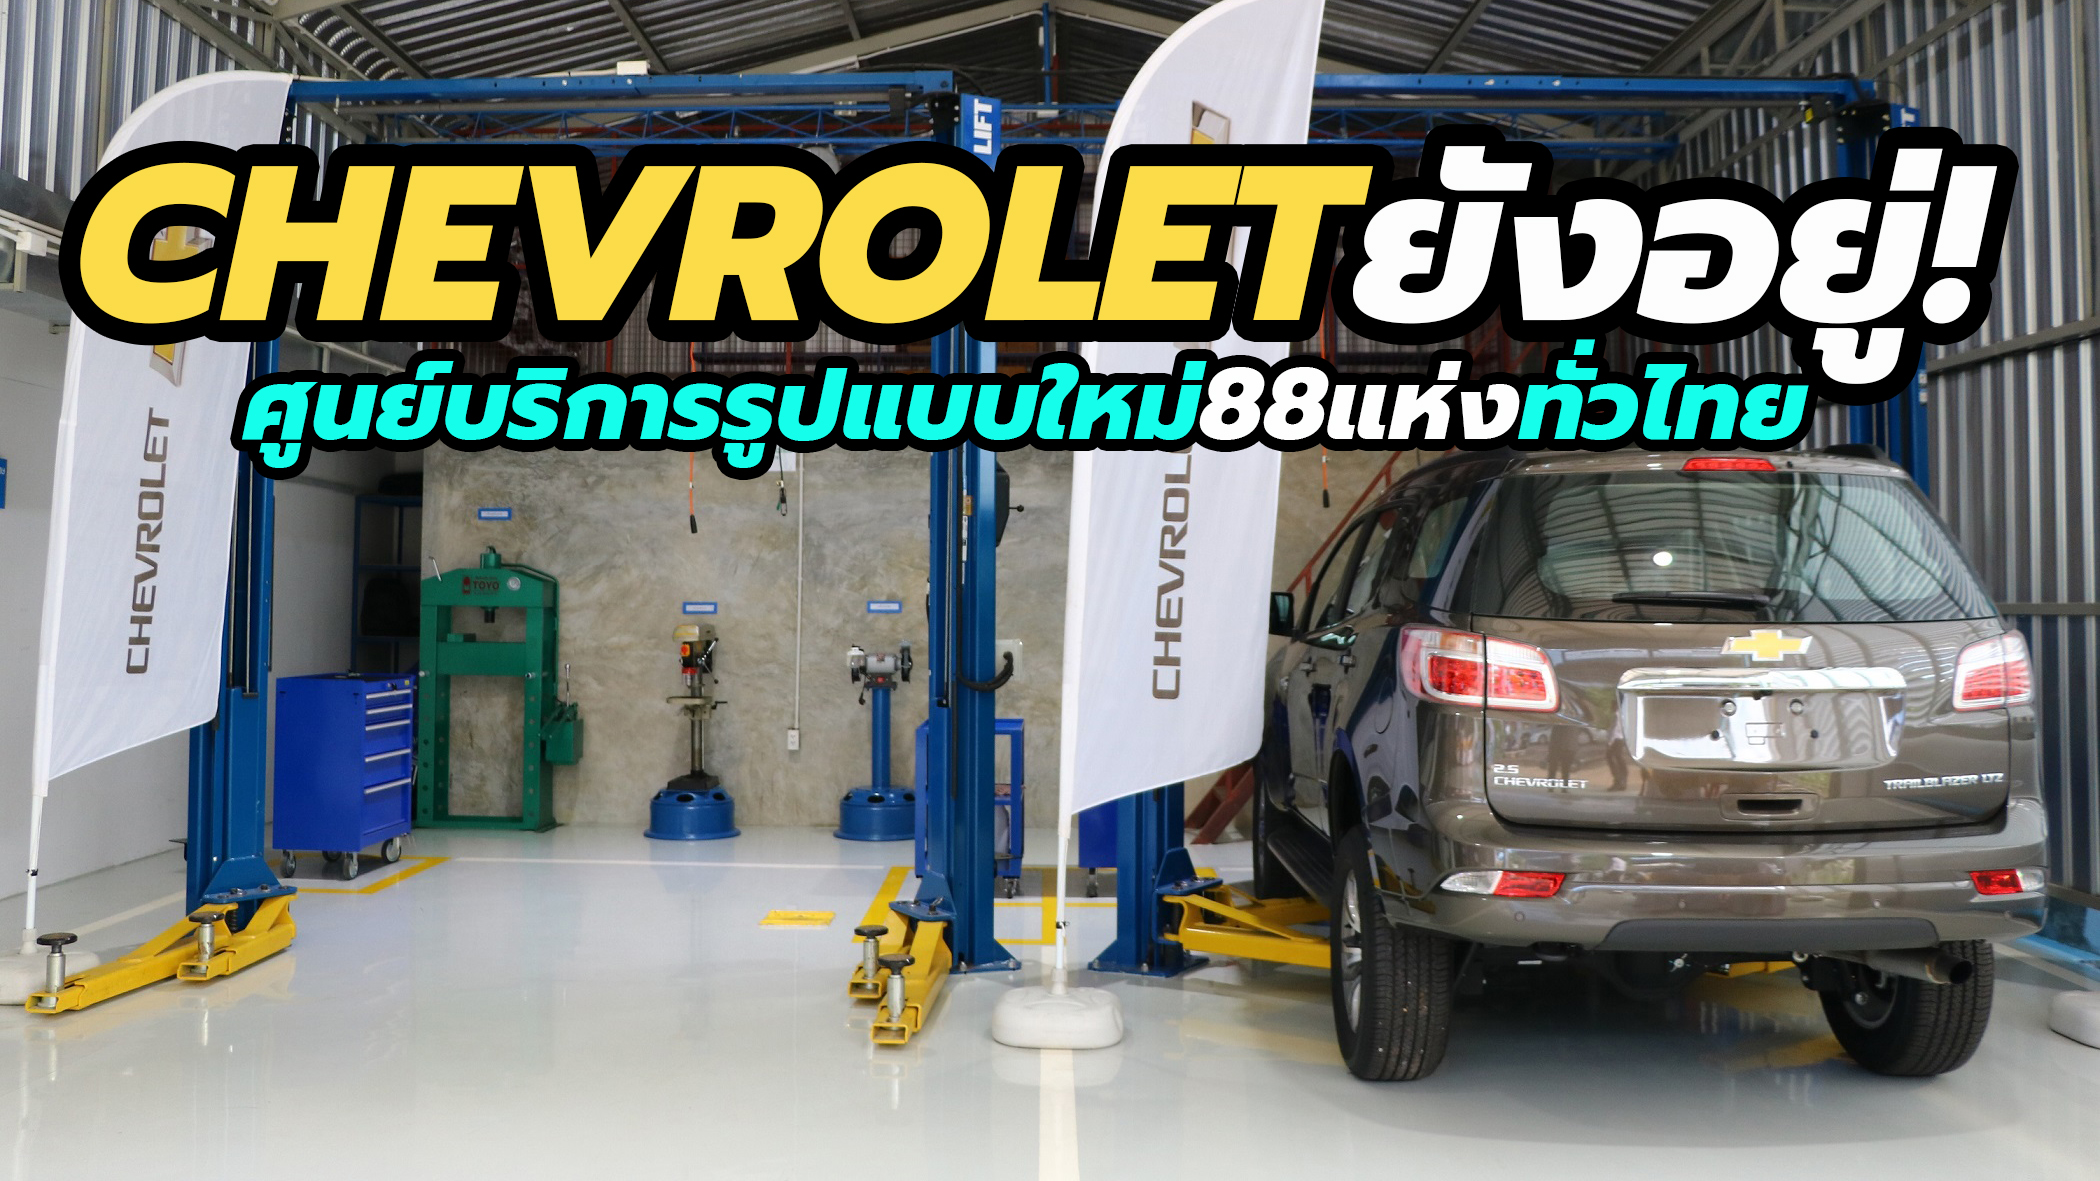 Chevrolet ประเทศไทย ยังอยู่! พร้อมศูนย์บริการมาตรฐานรูปแบบใหม่ 88 แห่งทั่วประเทศ